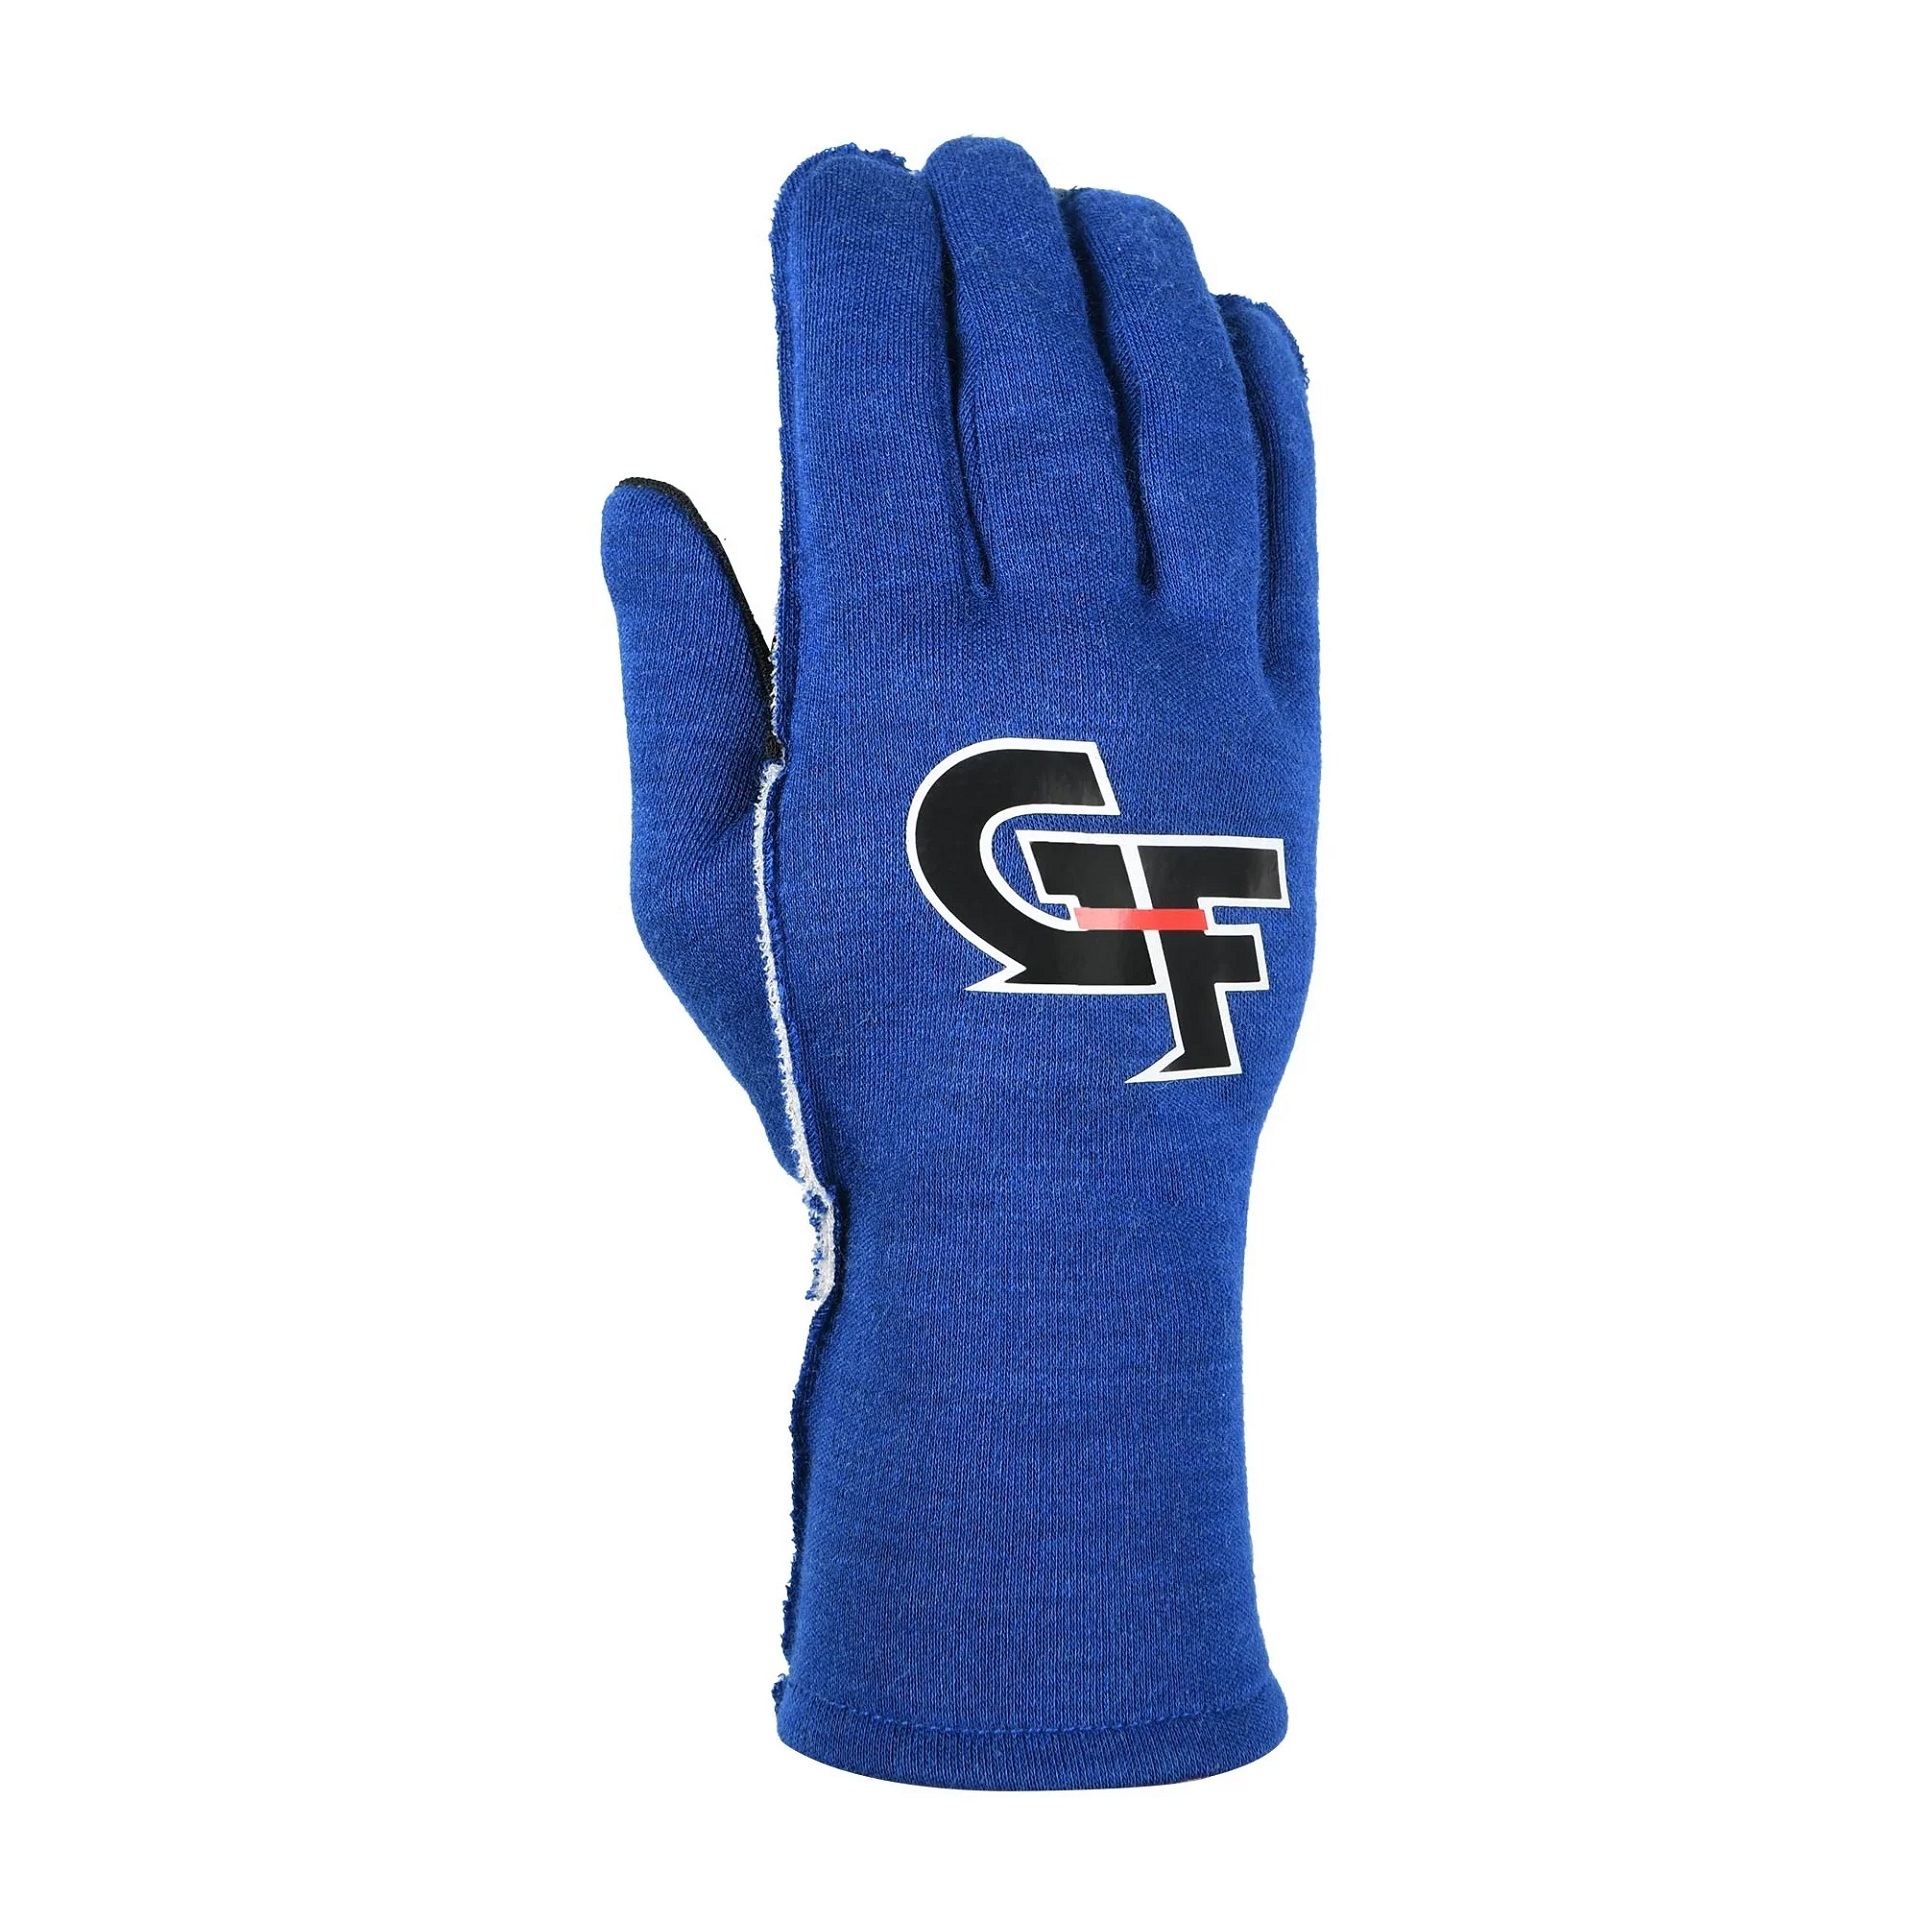 G-Limit RS Gloves XLG BU - 54000XLGBU